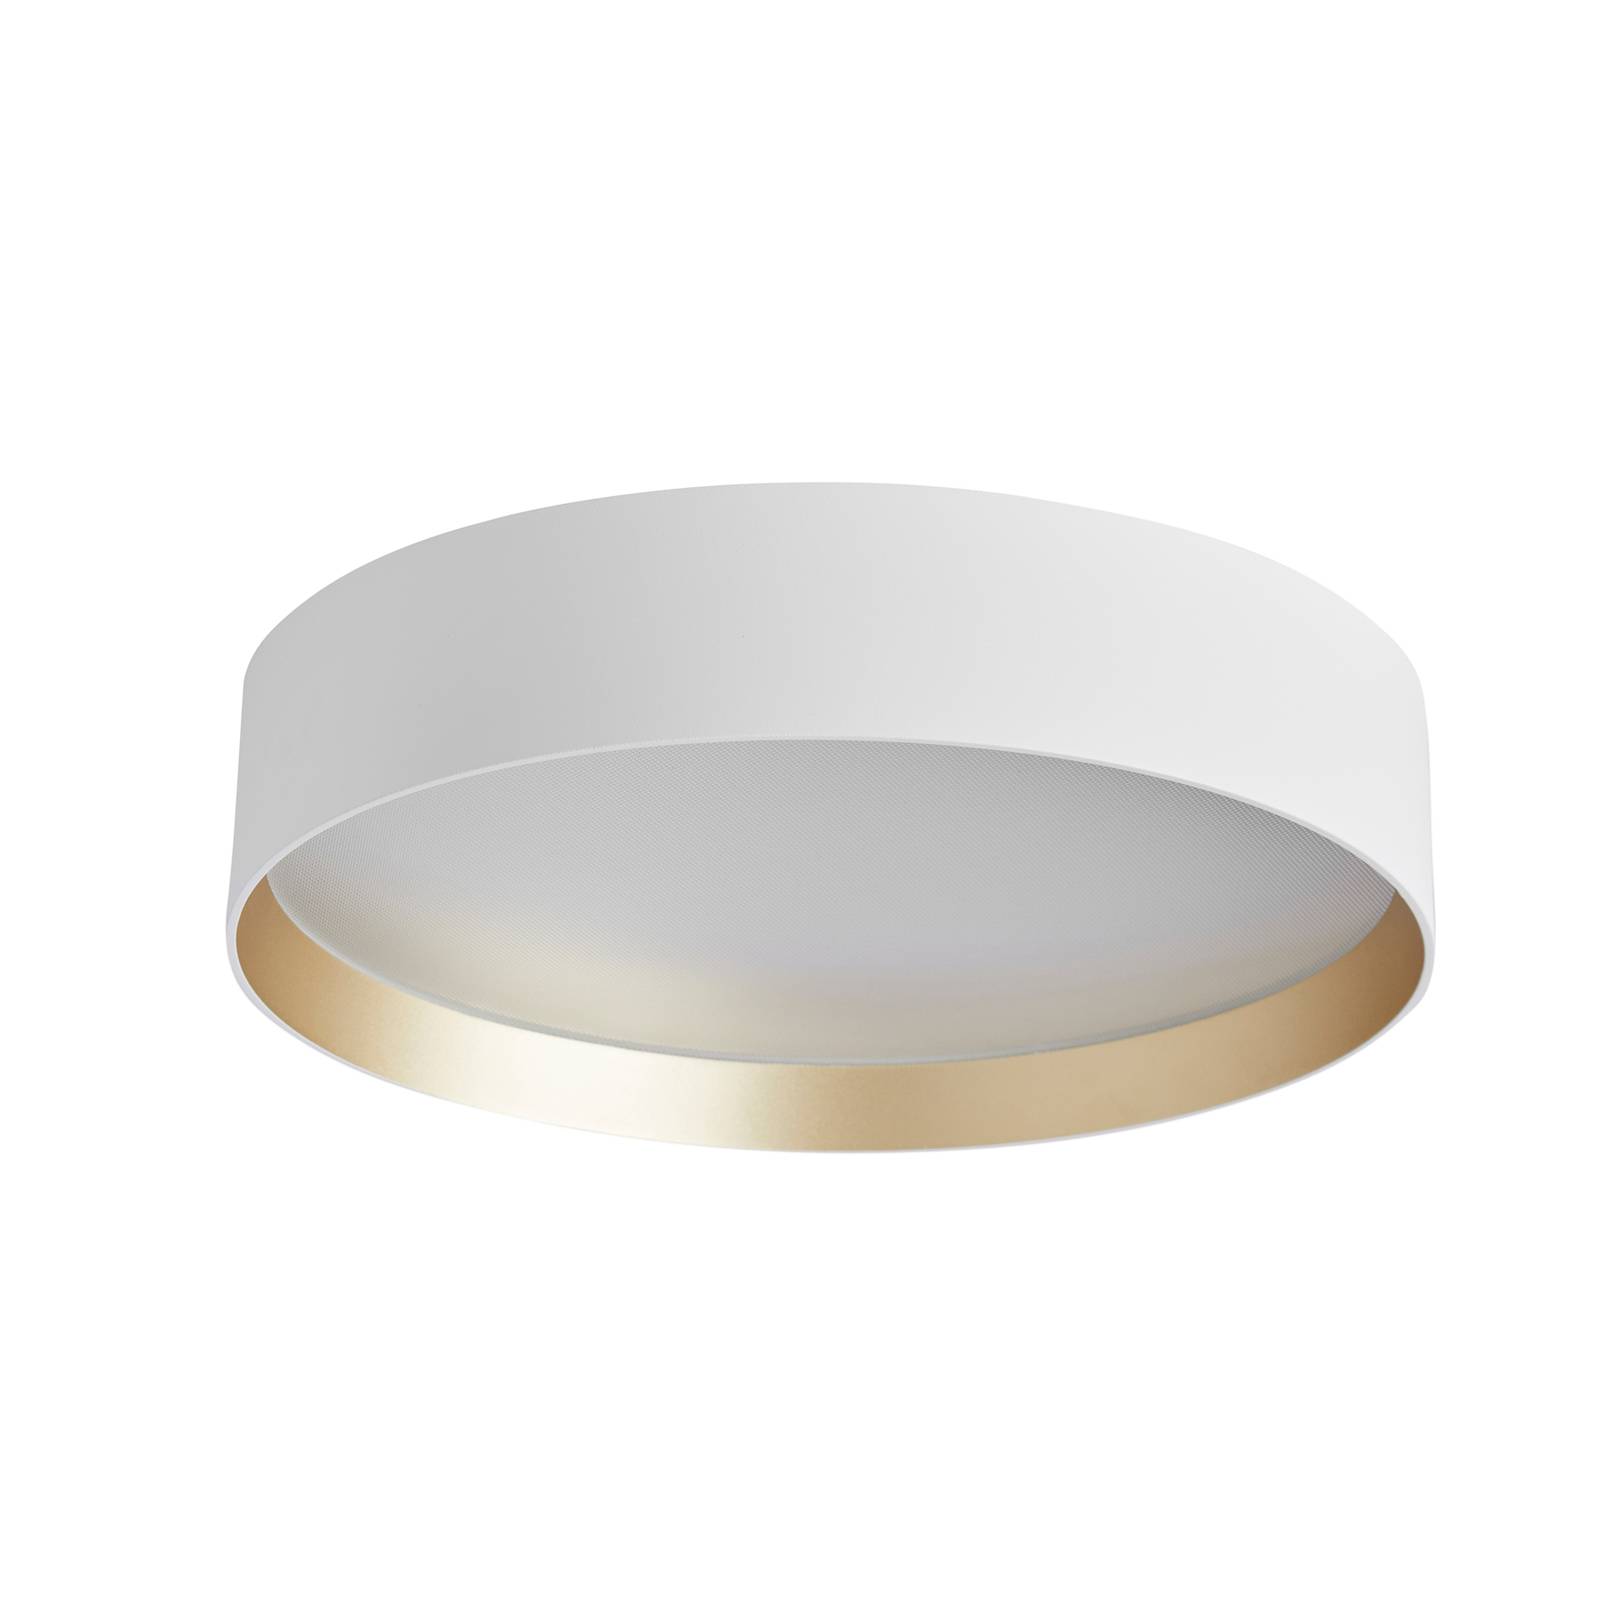 LOOM DESIGN Lucia LED-Deckenlampe Ø35cm weiß/gold